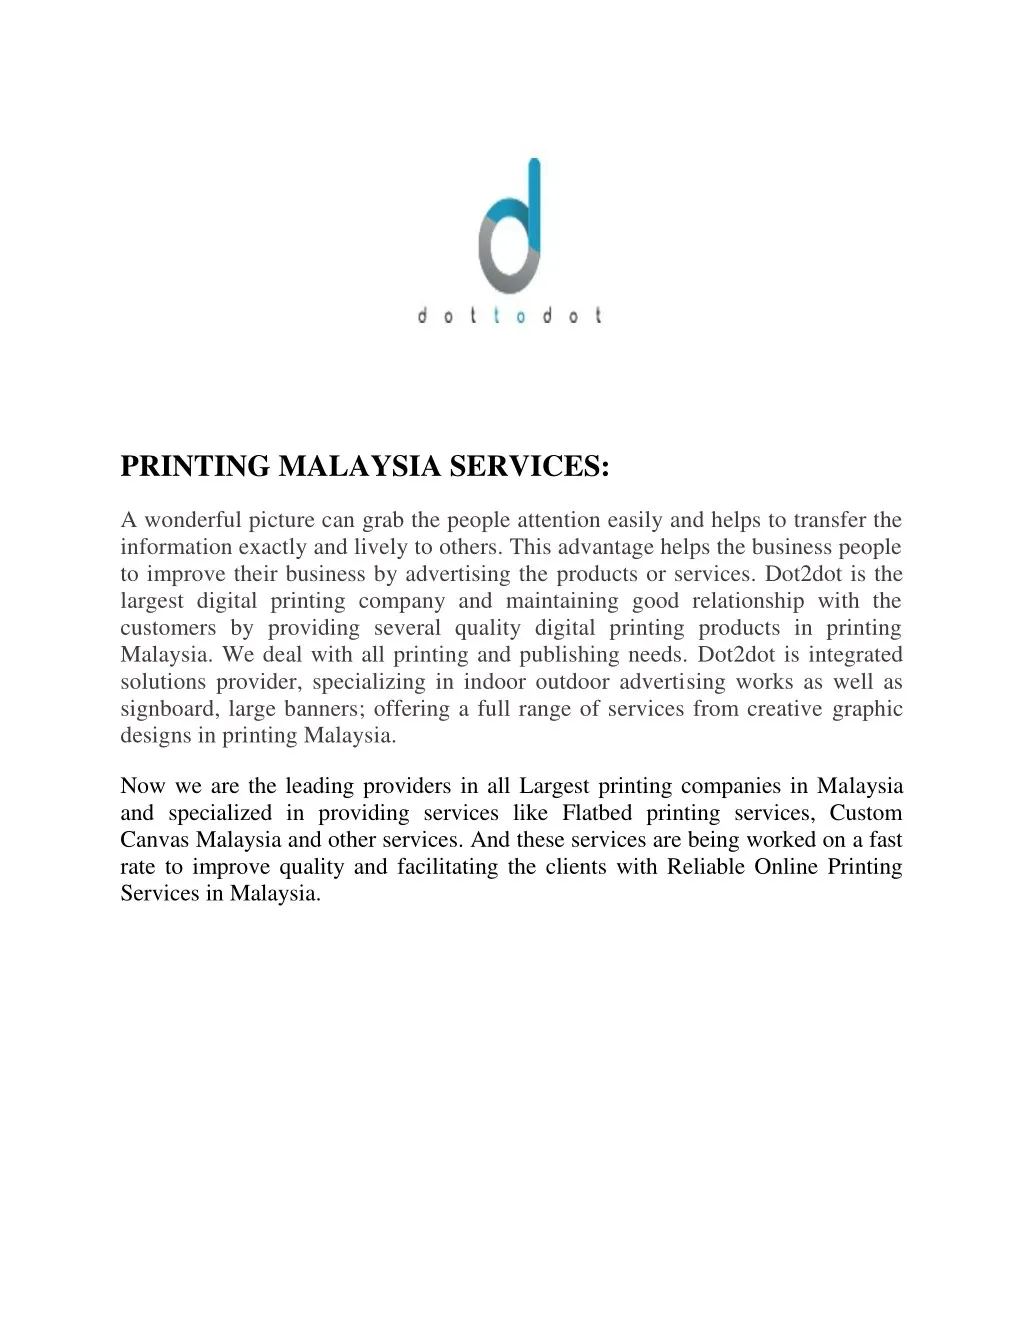 printing malaysia services